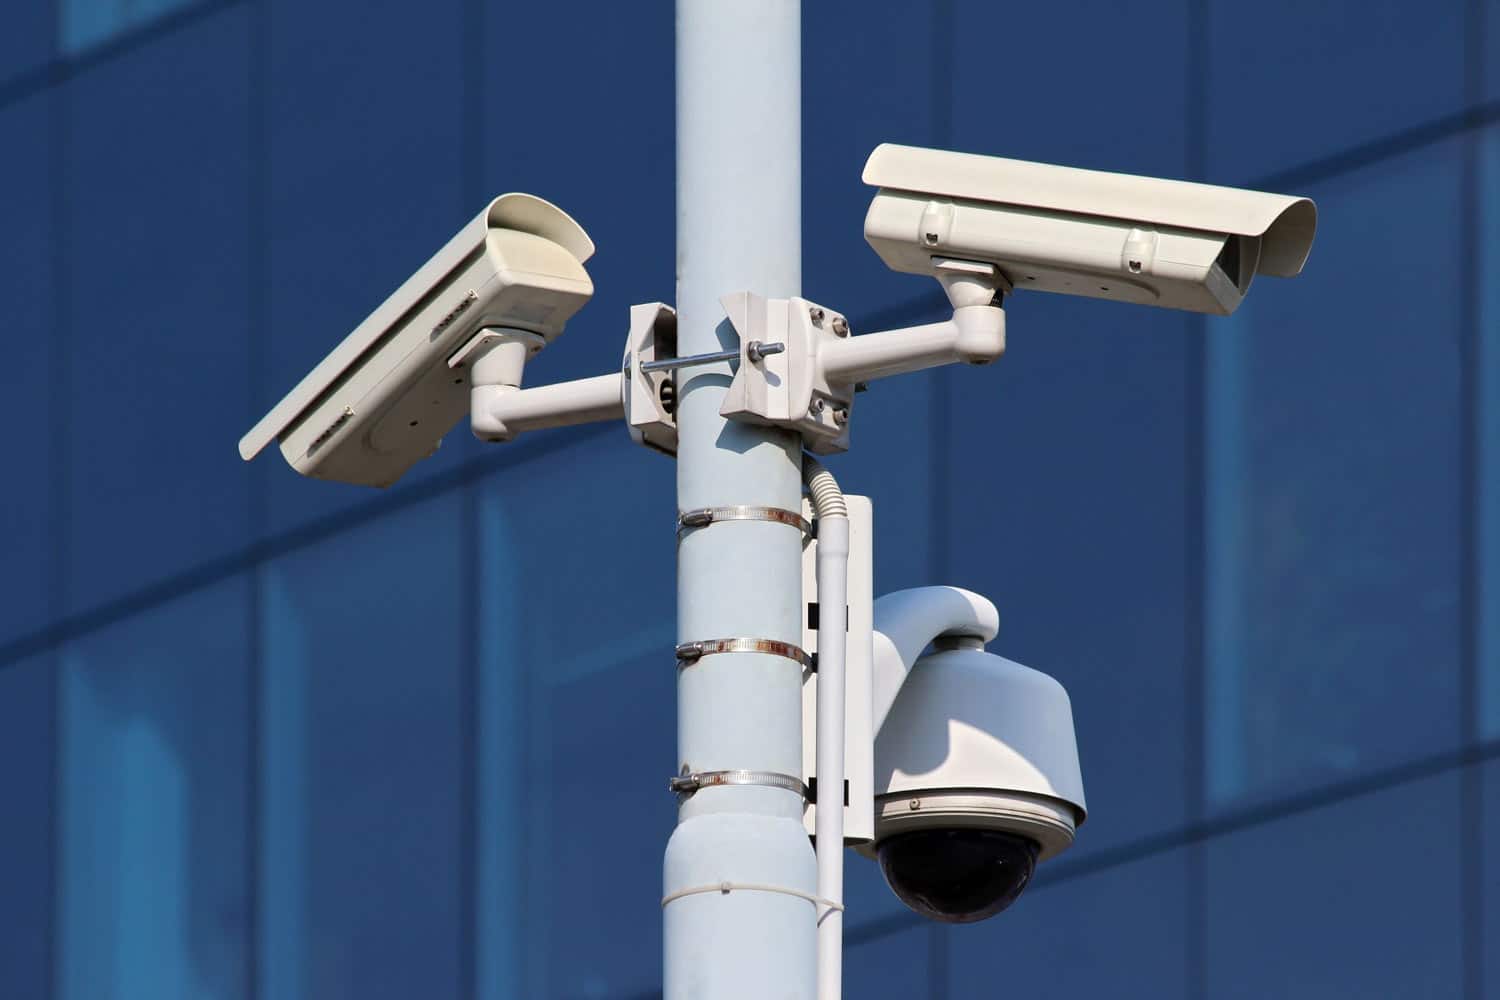 Analog CCTV Camera vs. IP Camera